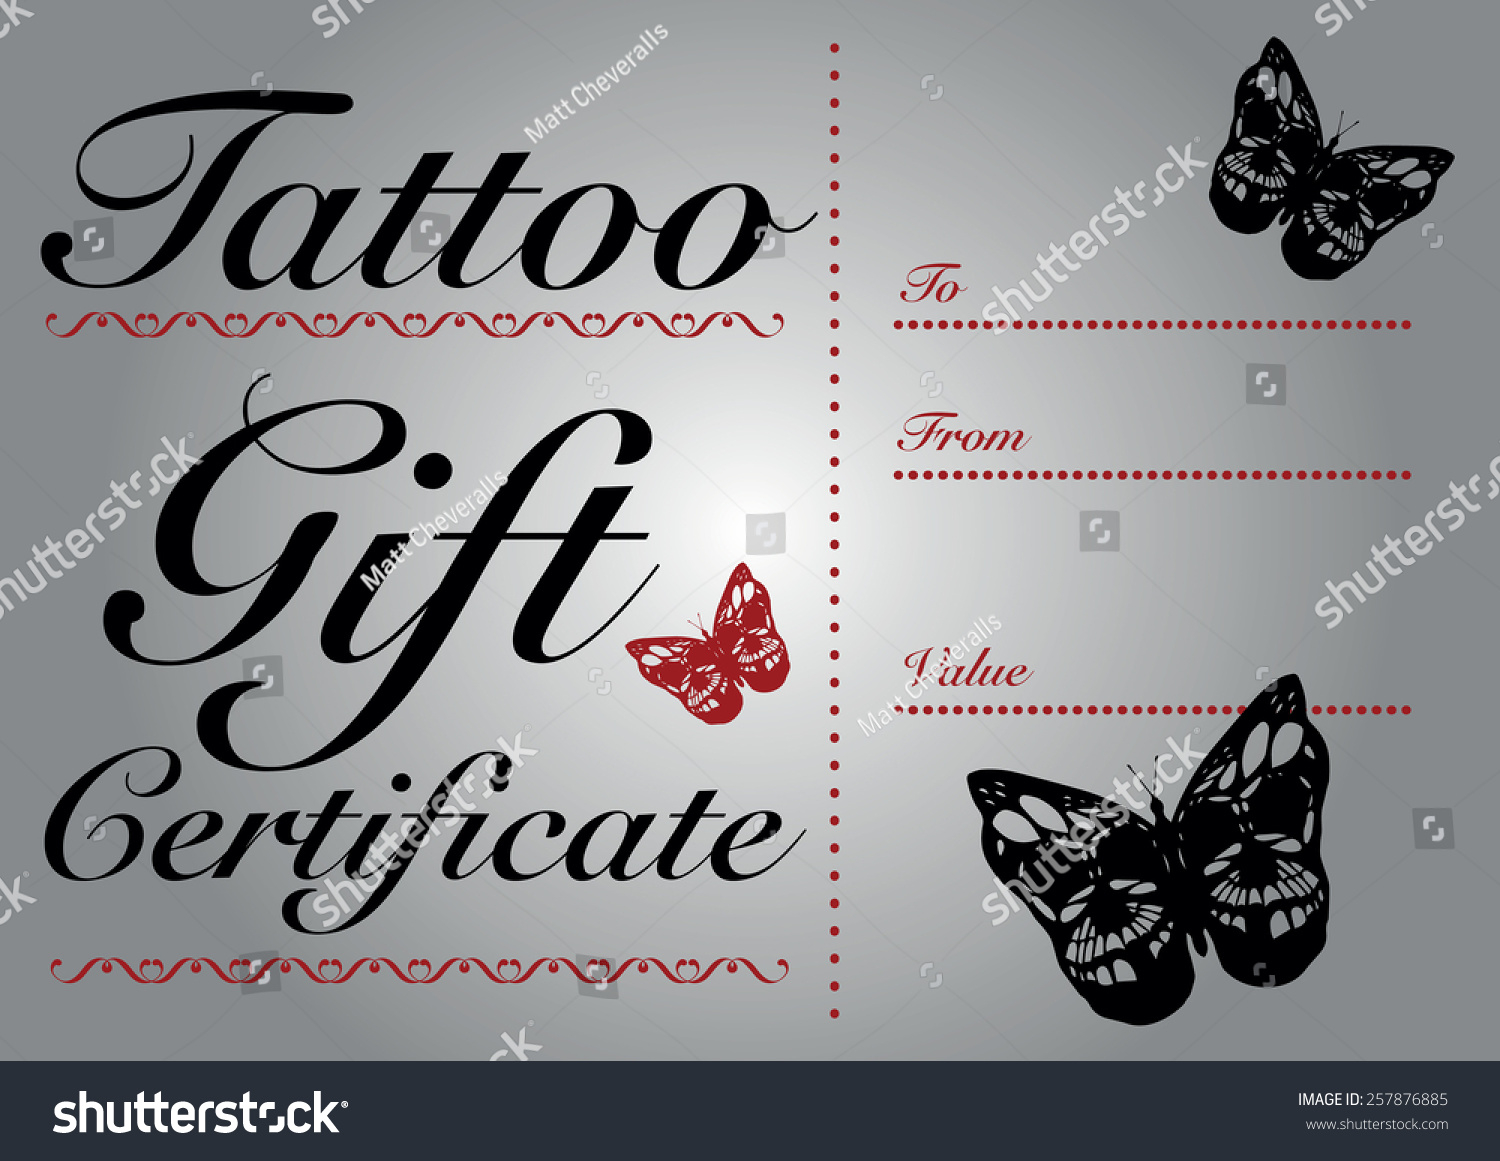 Butterfly Skull Tattoo Gift Card Gift: Stock-Vektorgrafik  Throughout Tattoo Gift Certificate Template